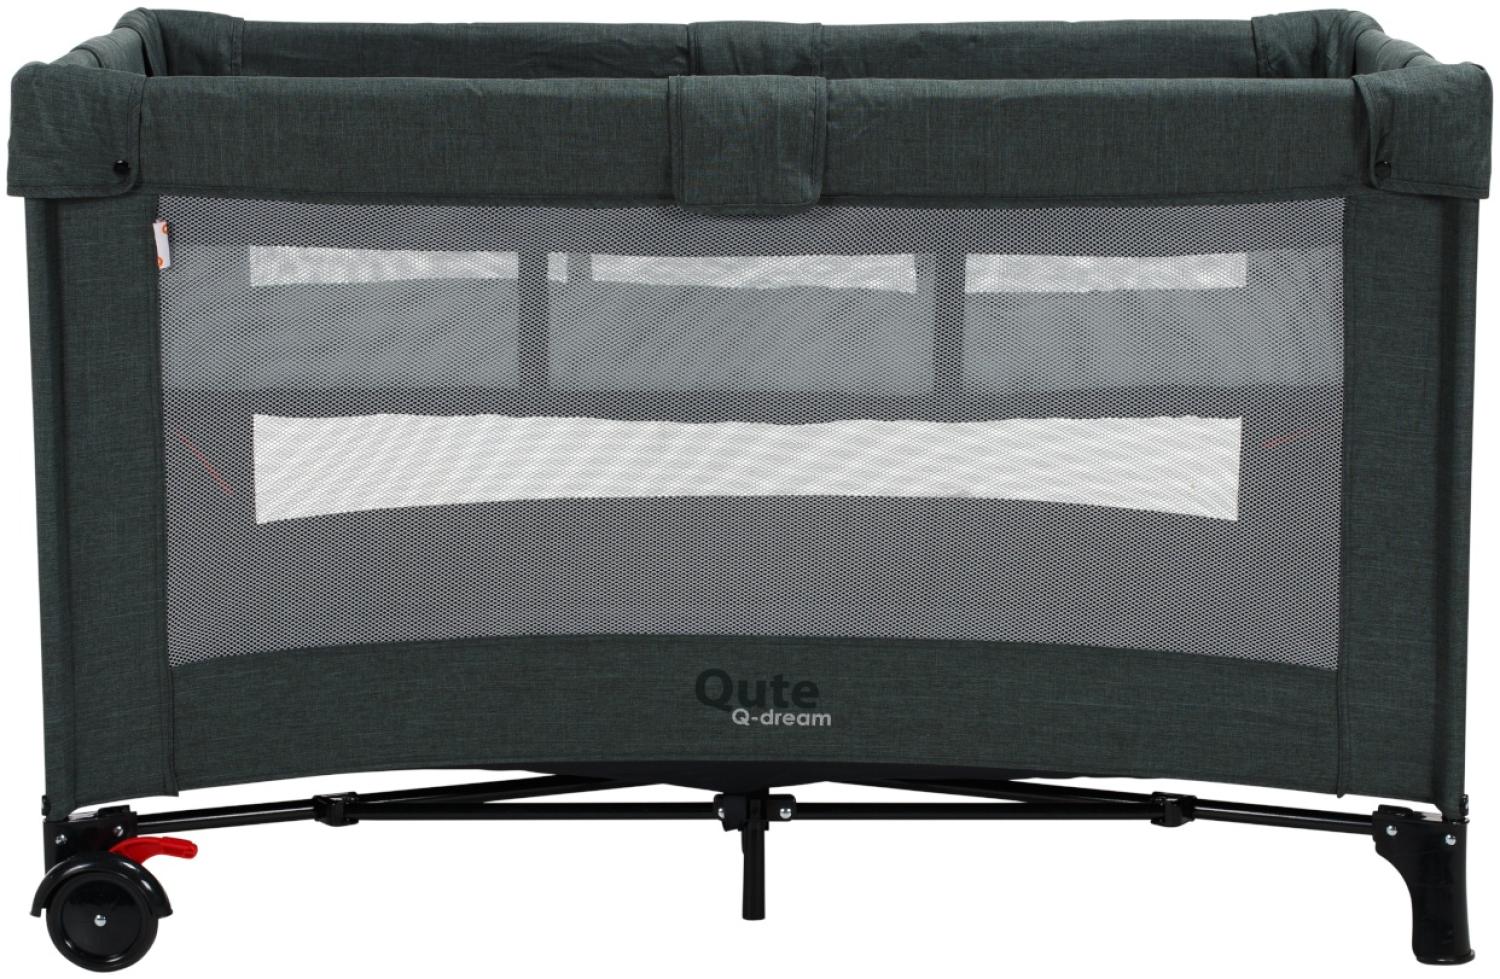 Qute Q-Dream Reisebett Jeans / Grün Bild 1